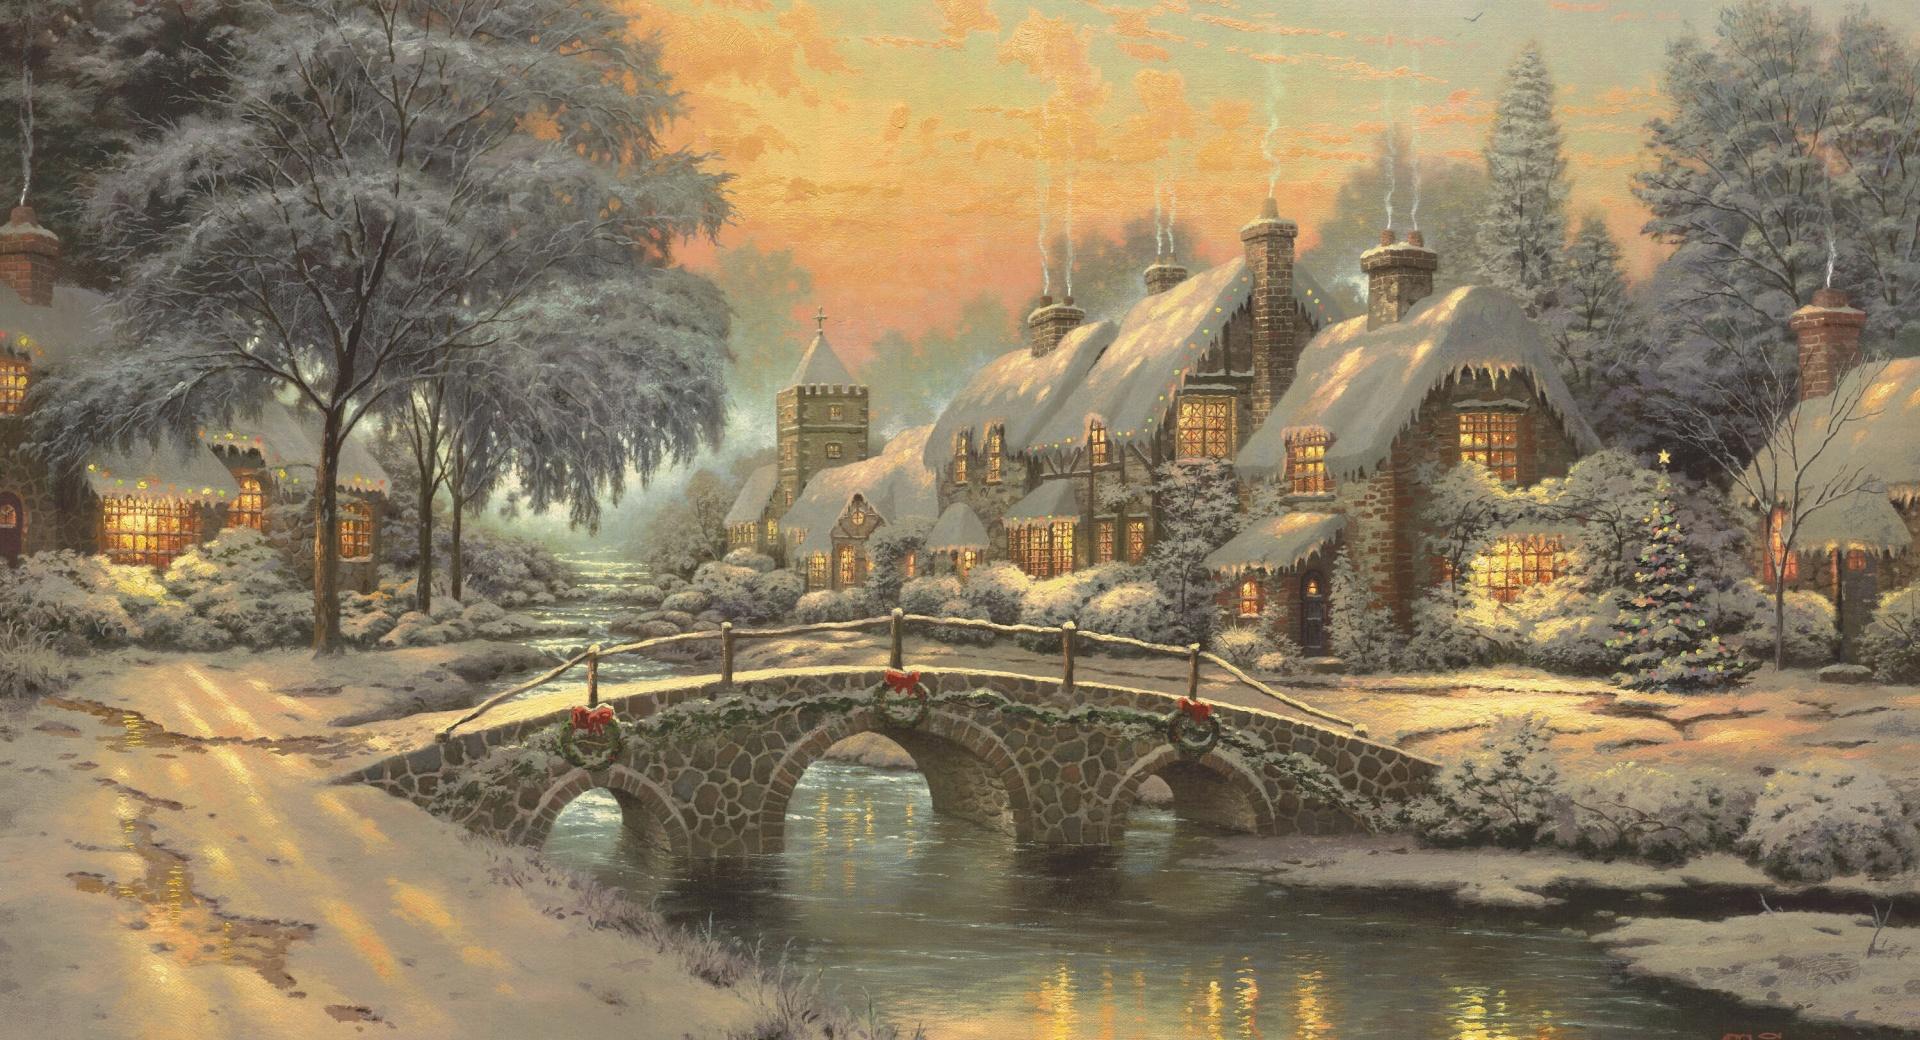 Classic Christmas Painting by Thomas Kinkade wallpapers HD quality